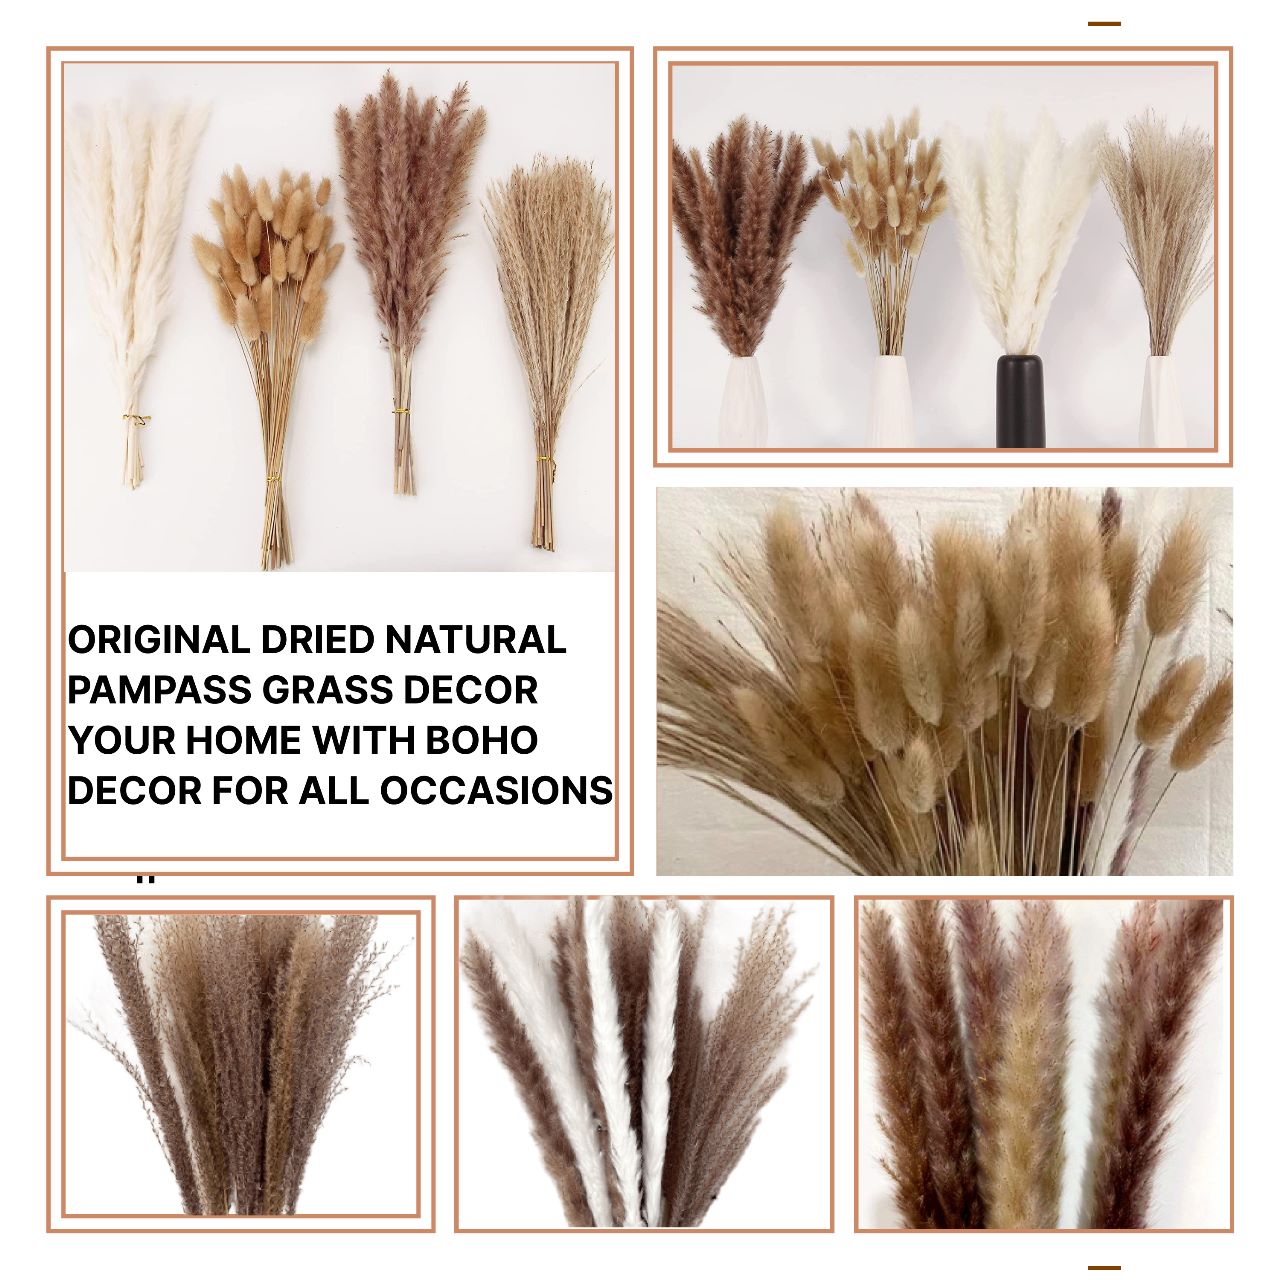 Natural Dried Pampas Grass Decor [85 Pcs Set]